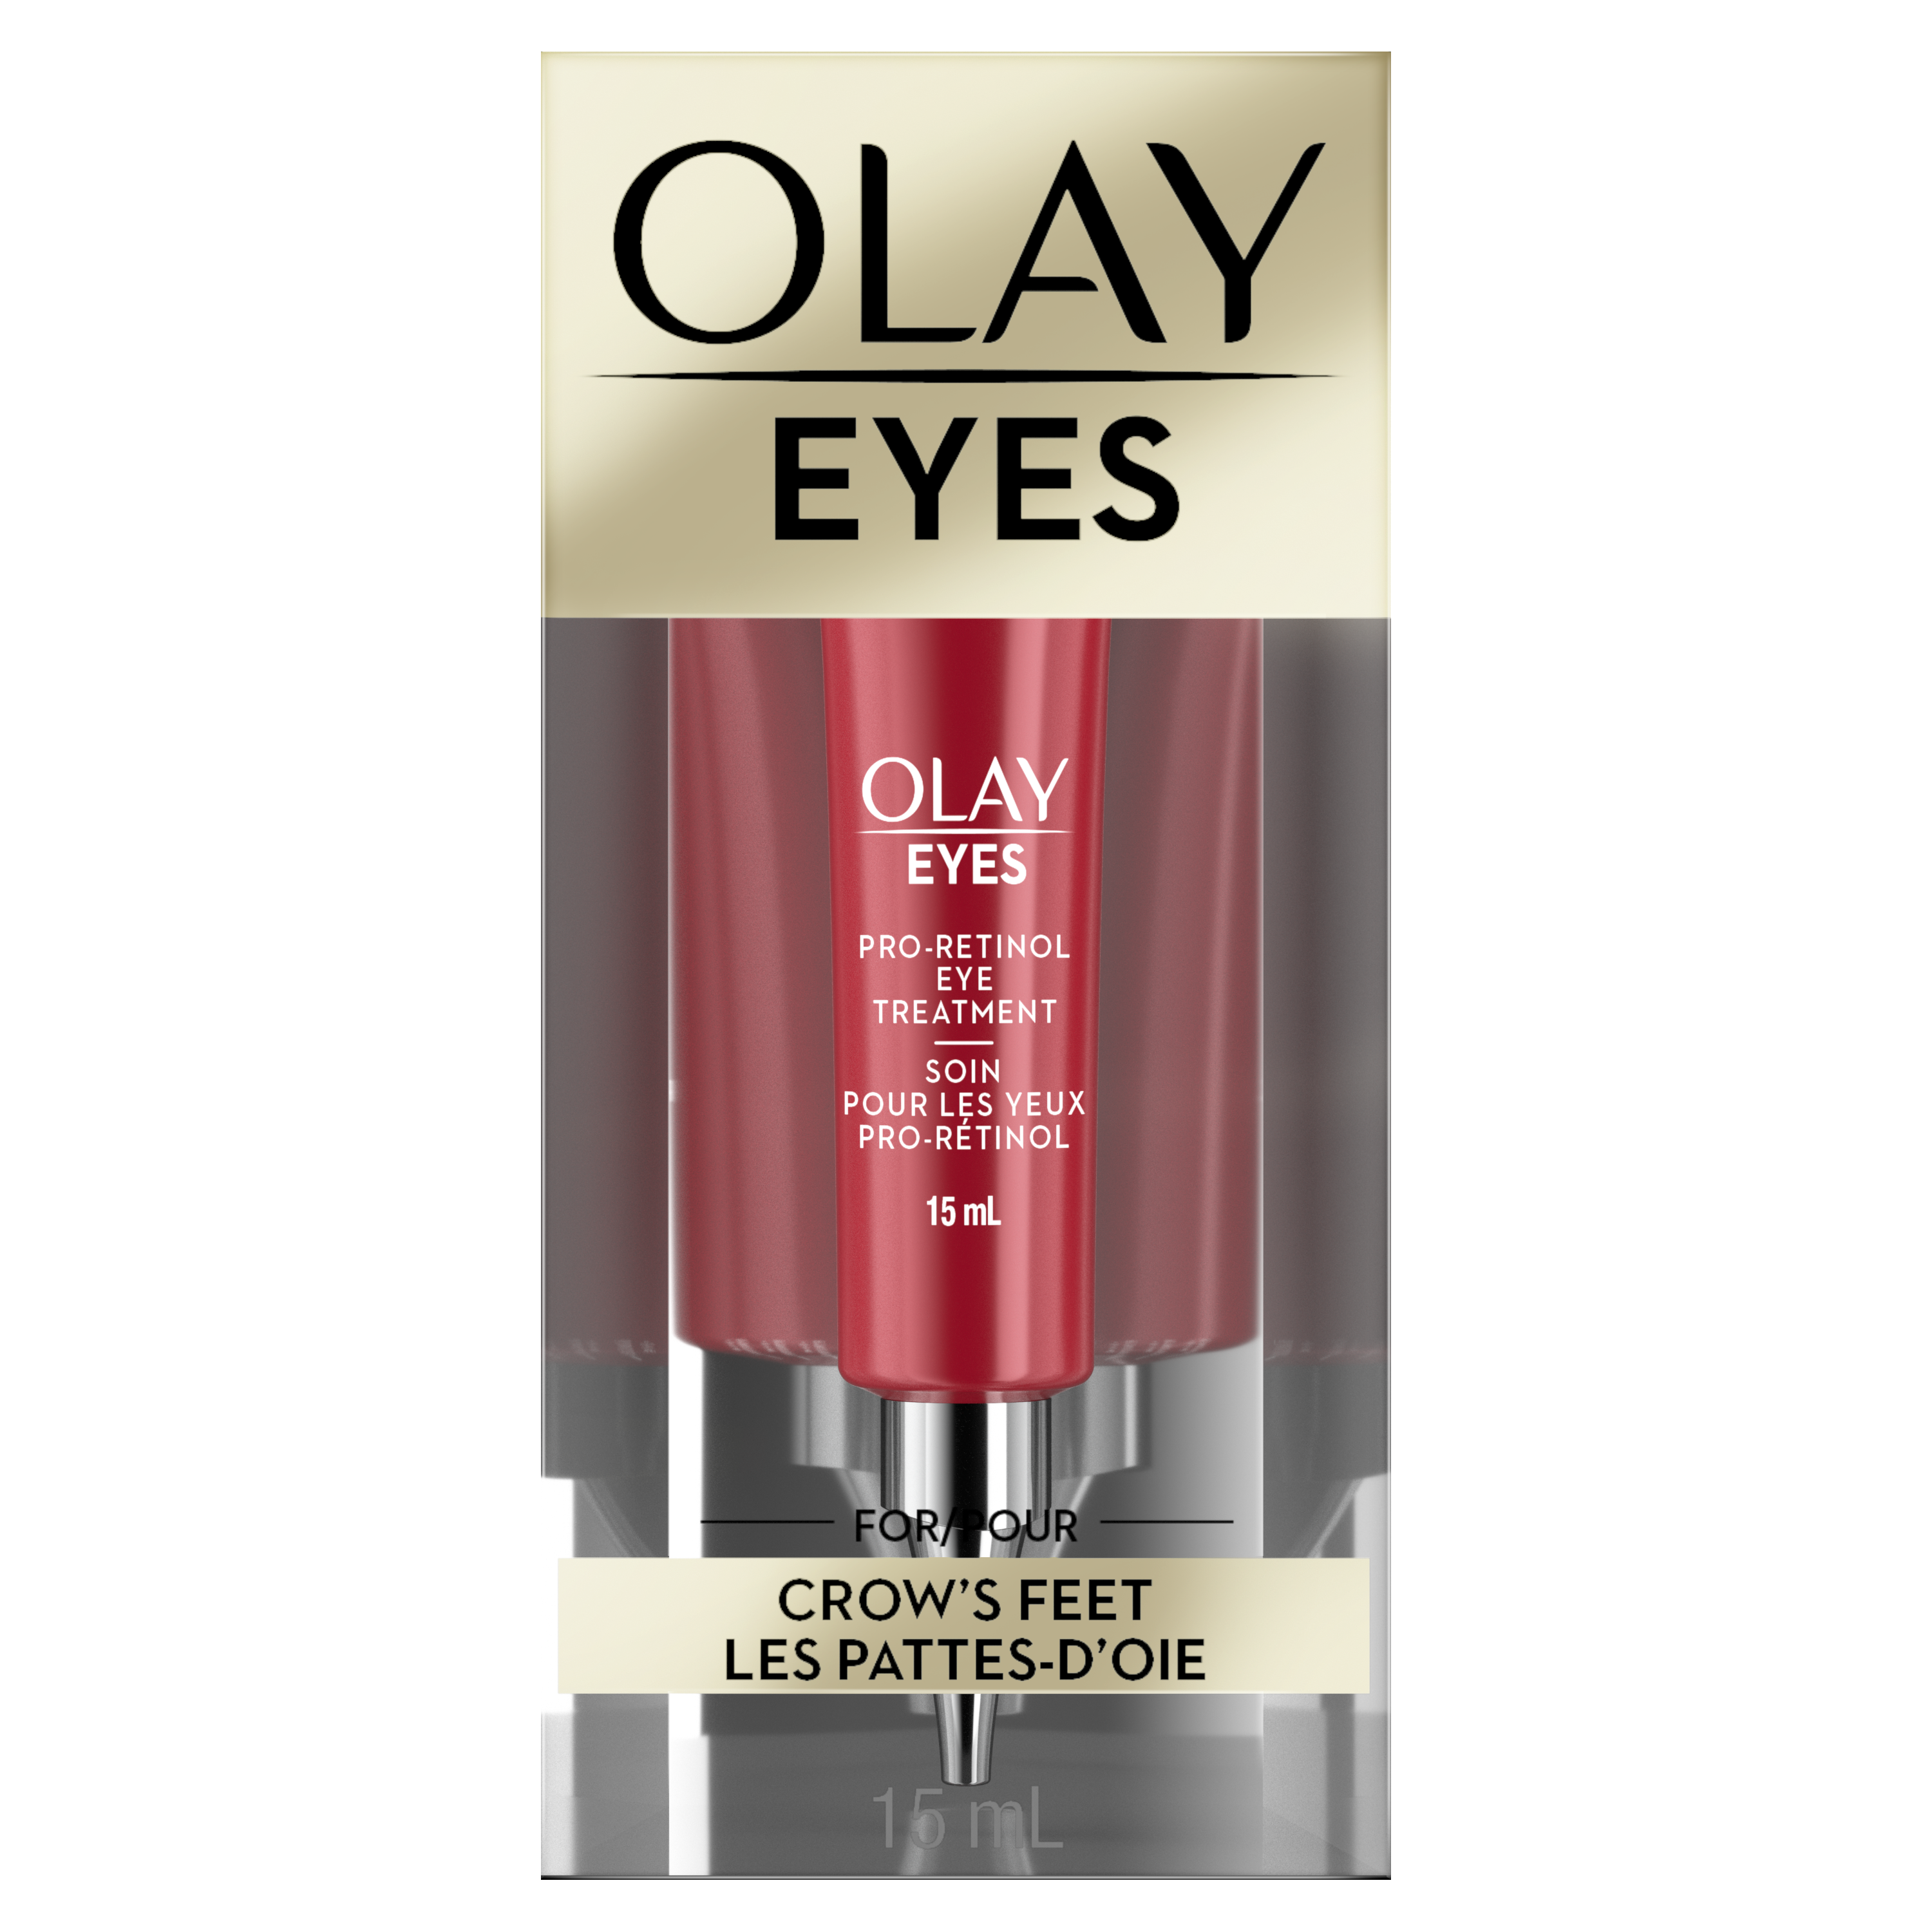 Olay Eyes Pro Retinol Eye Treatment for Wrinkles_1